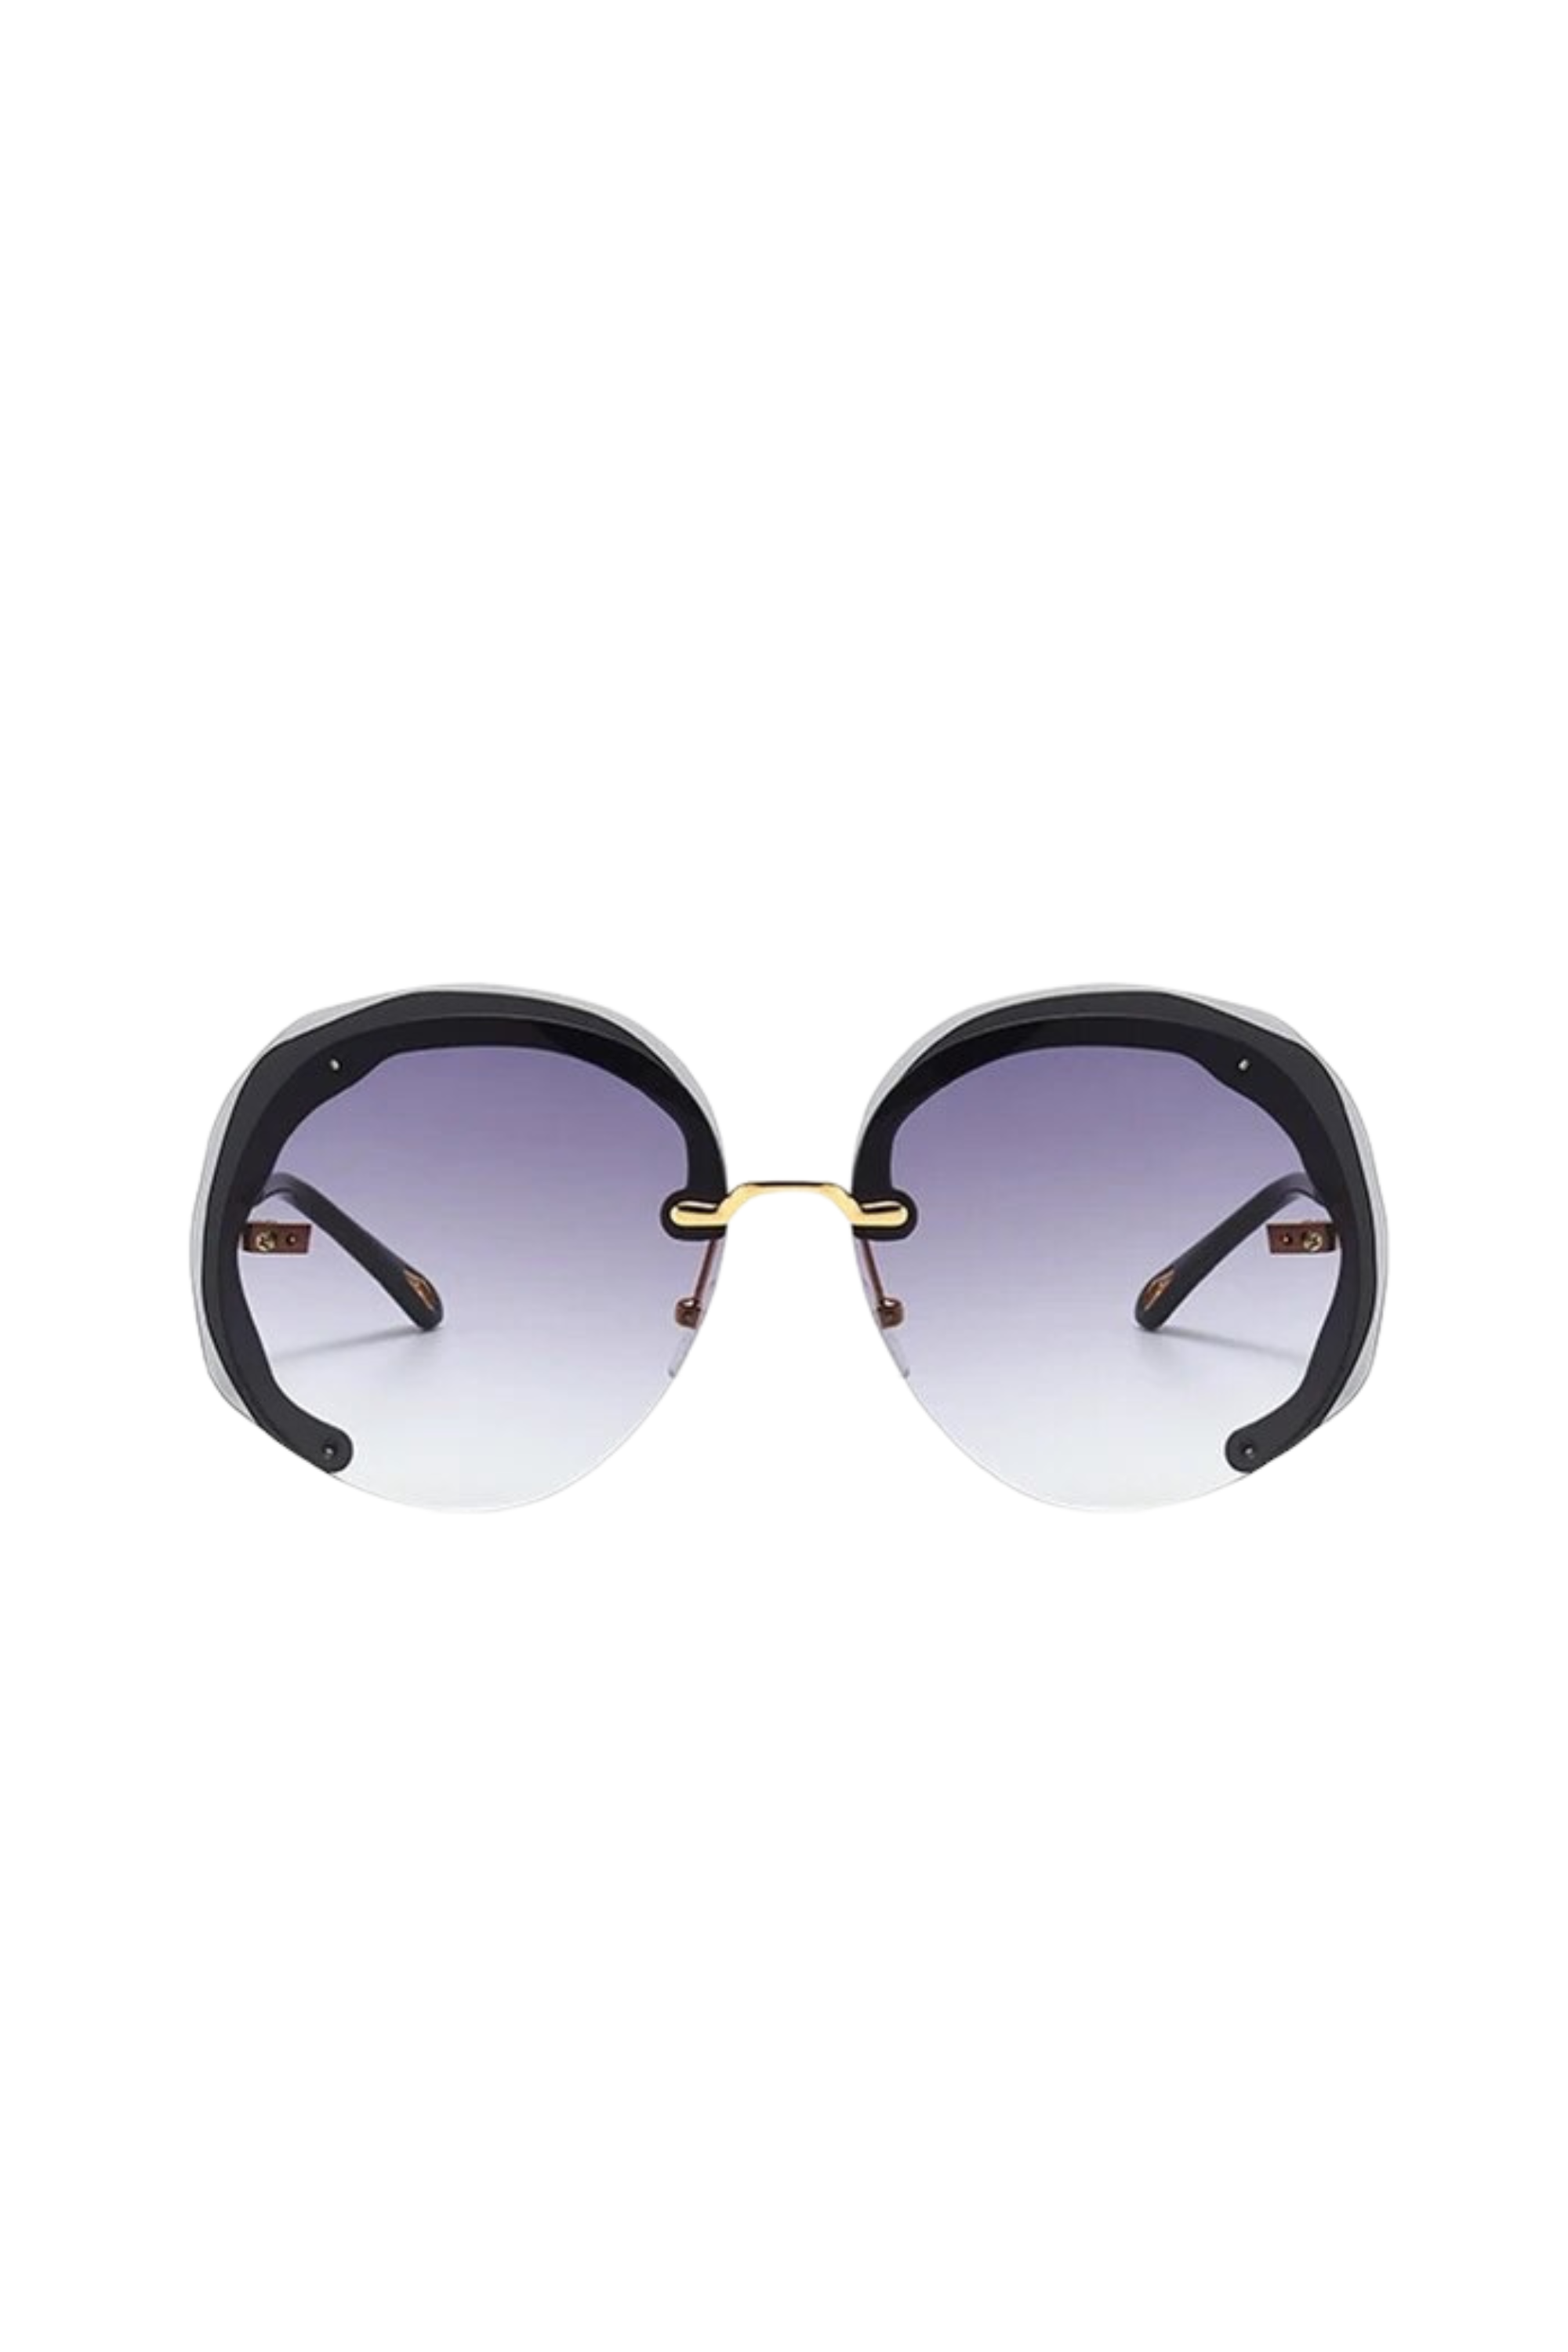 GOLDxTEAL black rimless oversized sunglasses.